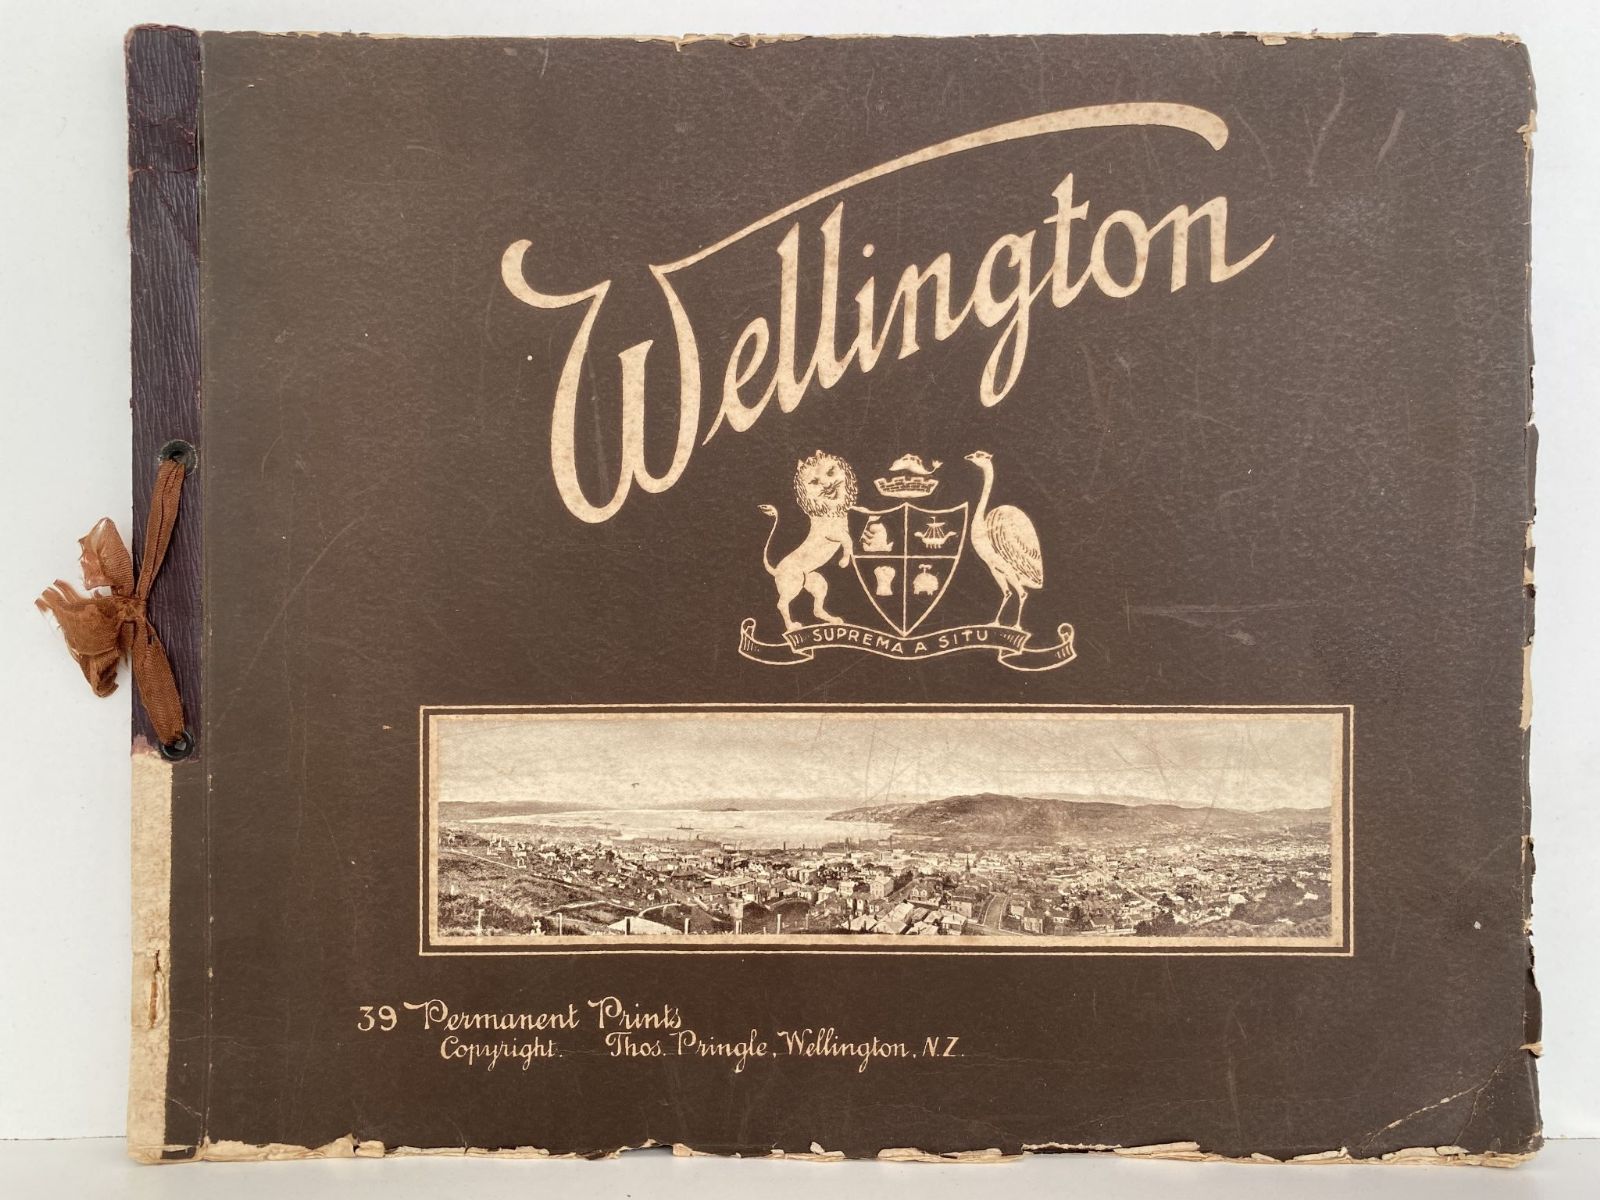 WELLINGTON: 39 Paramount Prints